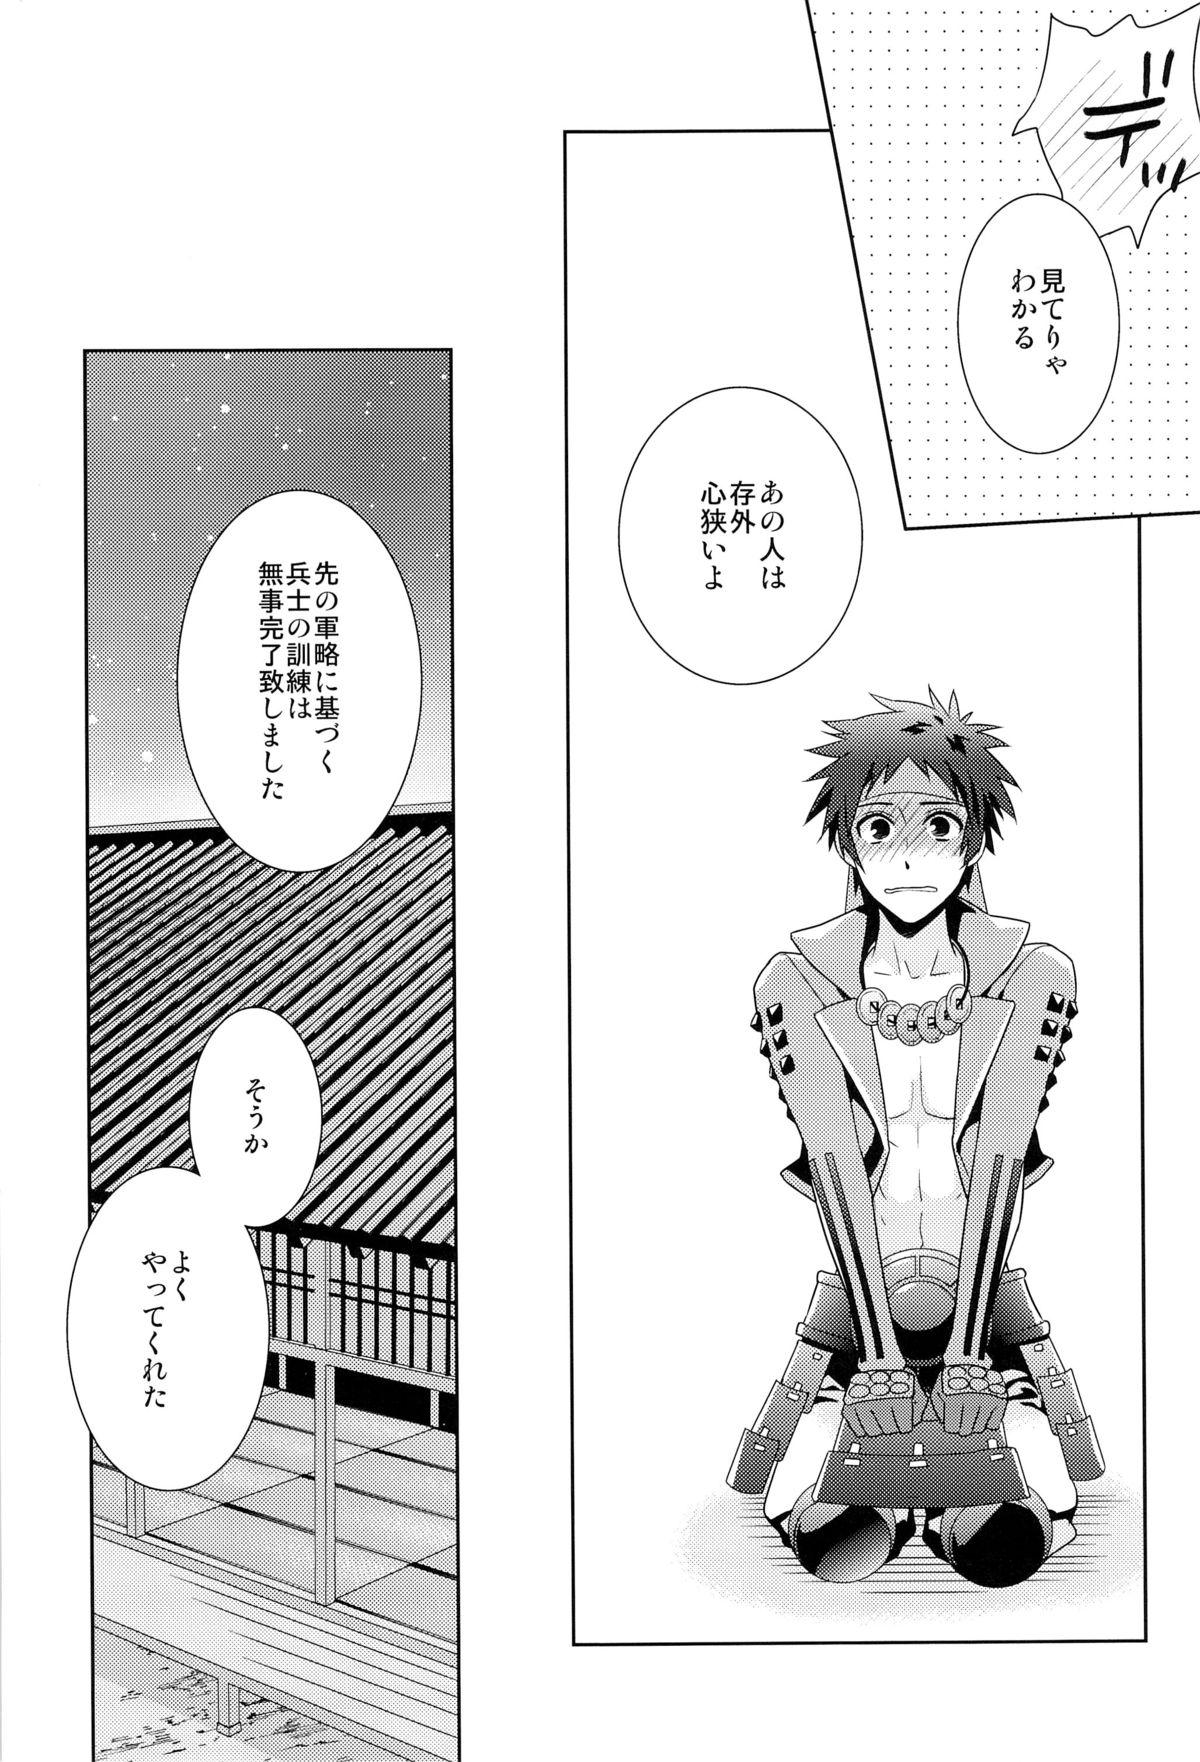 Soles envy - Sengoku basara Stripper - Page 9